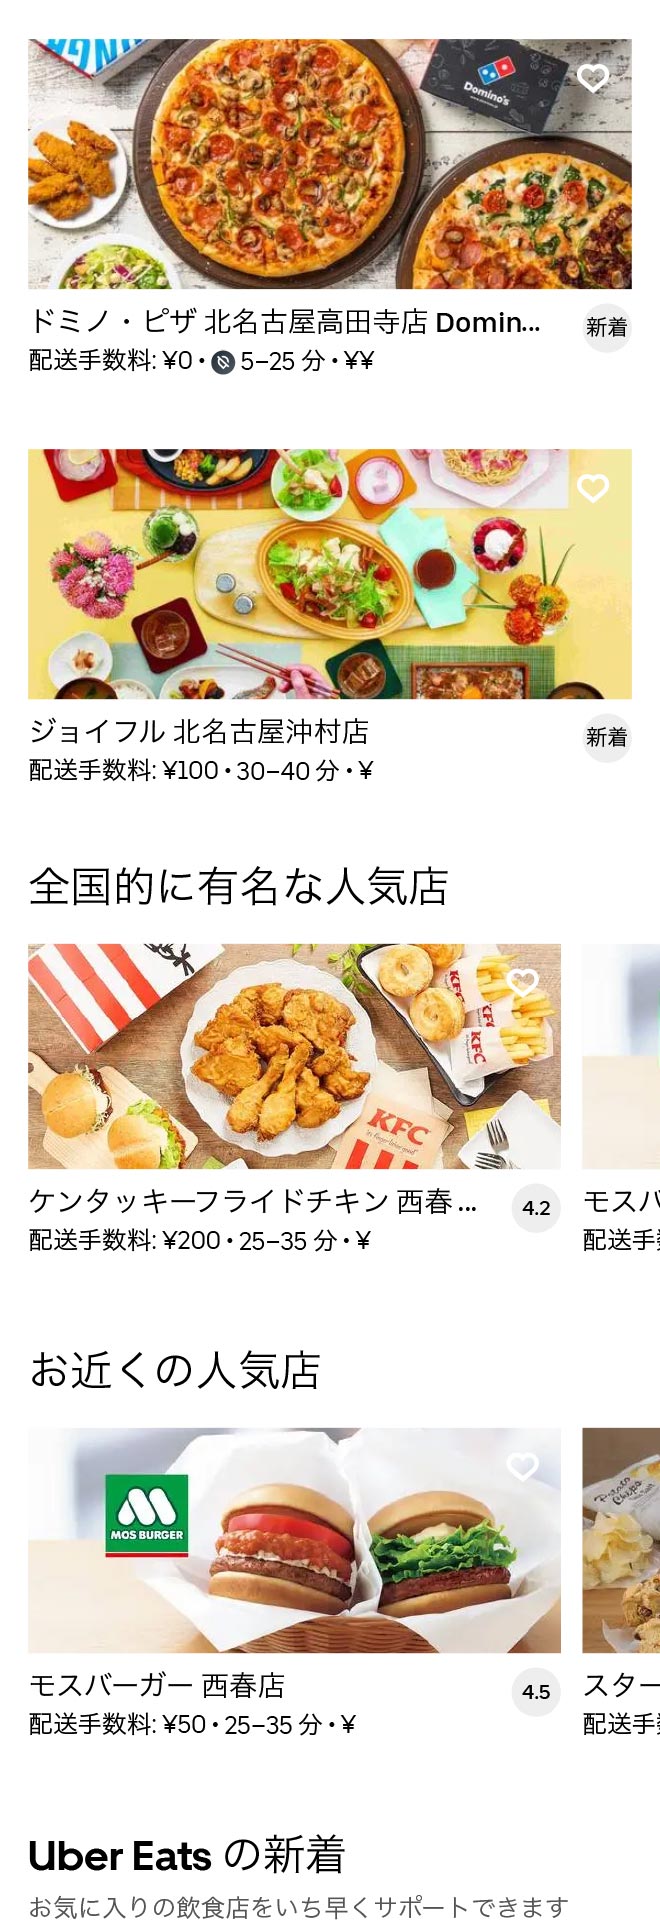 Nishiharu menu 2010 01